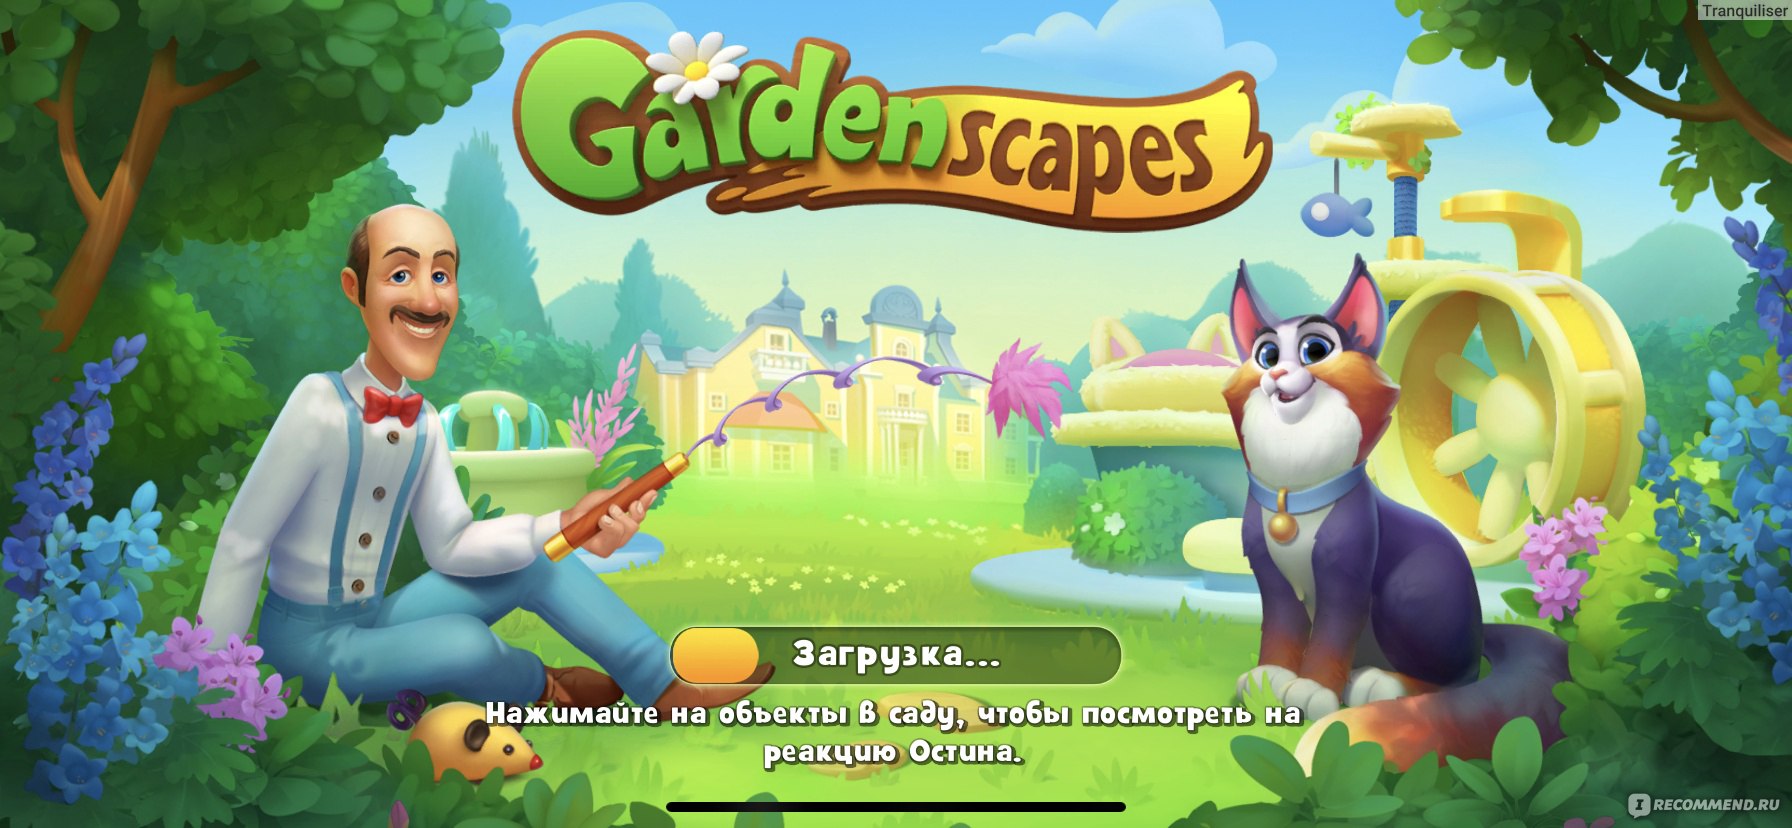 Gardenscapes : Золотой Билет